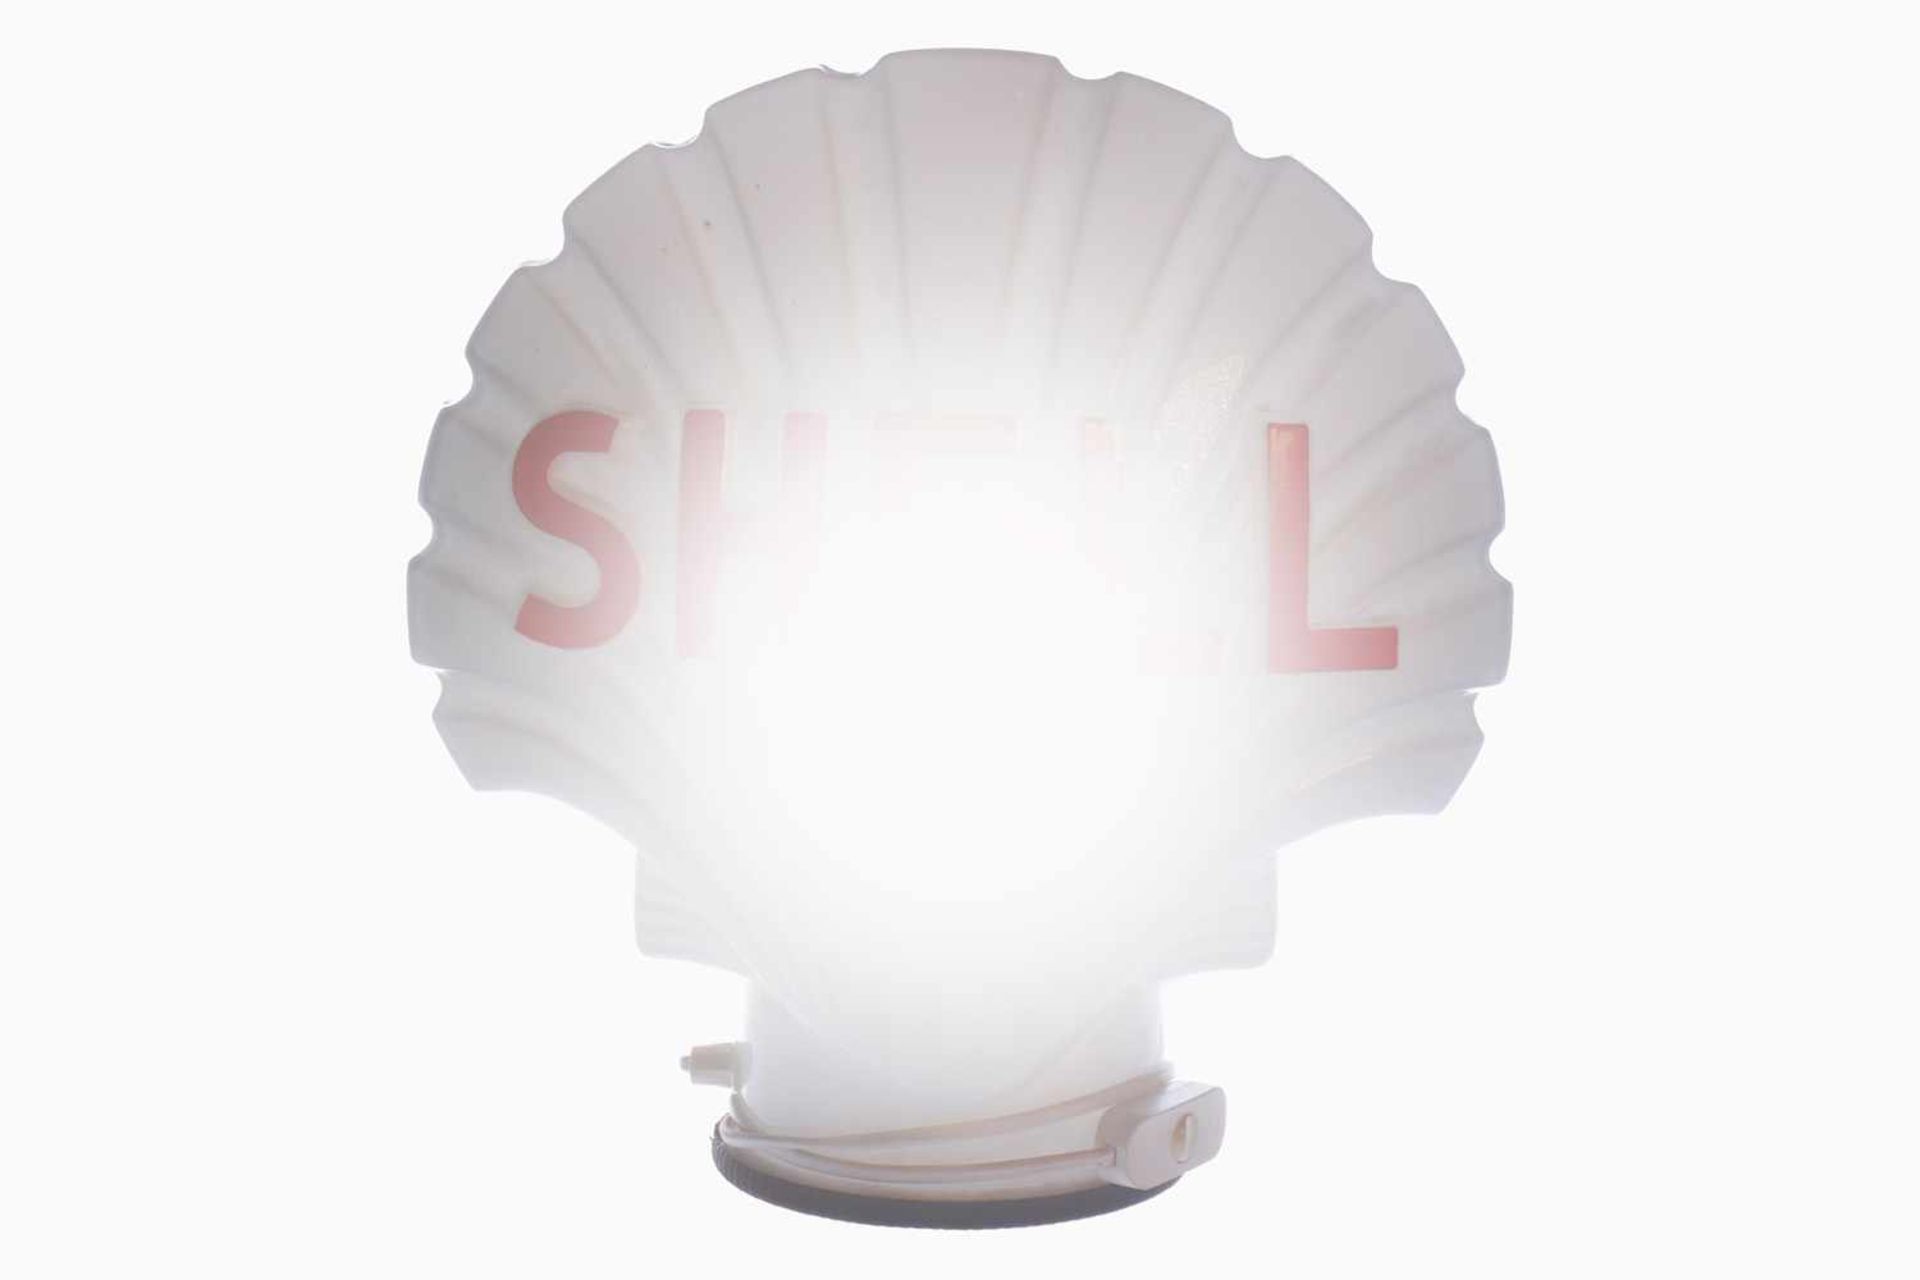 Shell Glasmuschel, beleuchtbar, Höhe 38 cm- - -22.50 % buyer's premium on the hammer price19.00 %